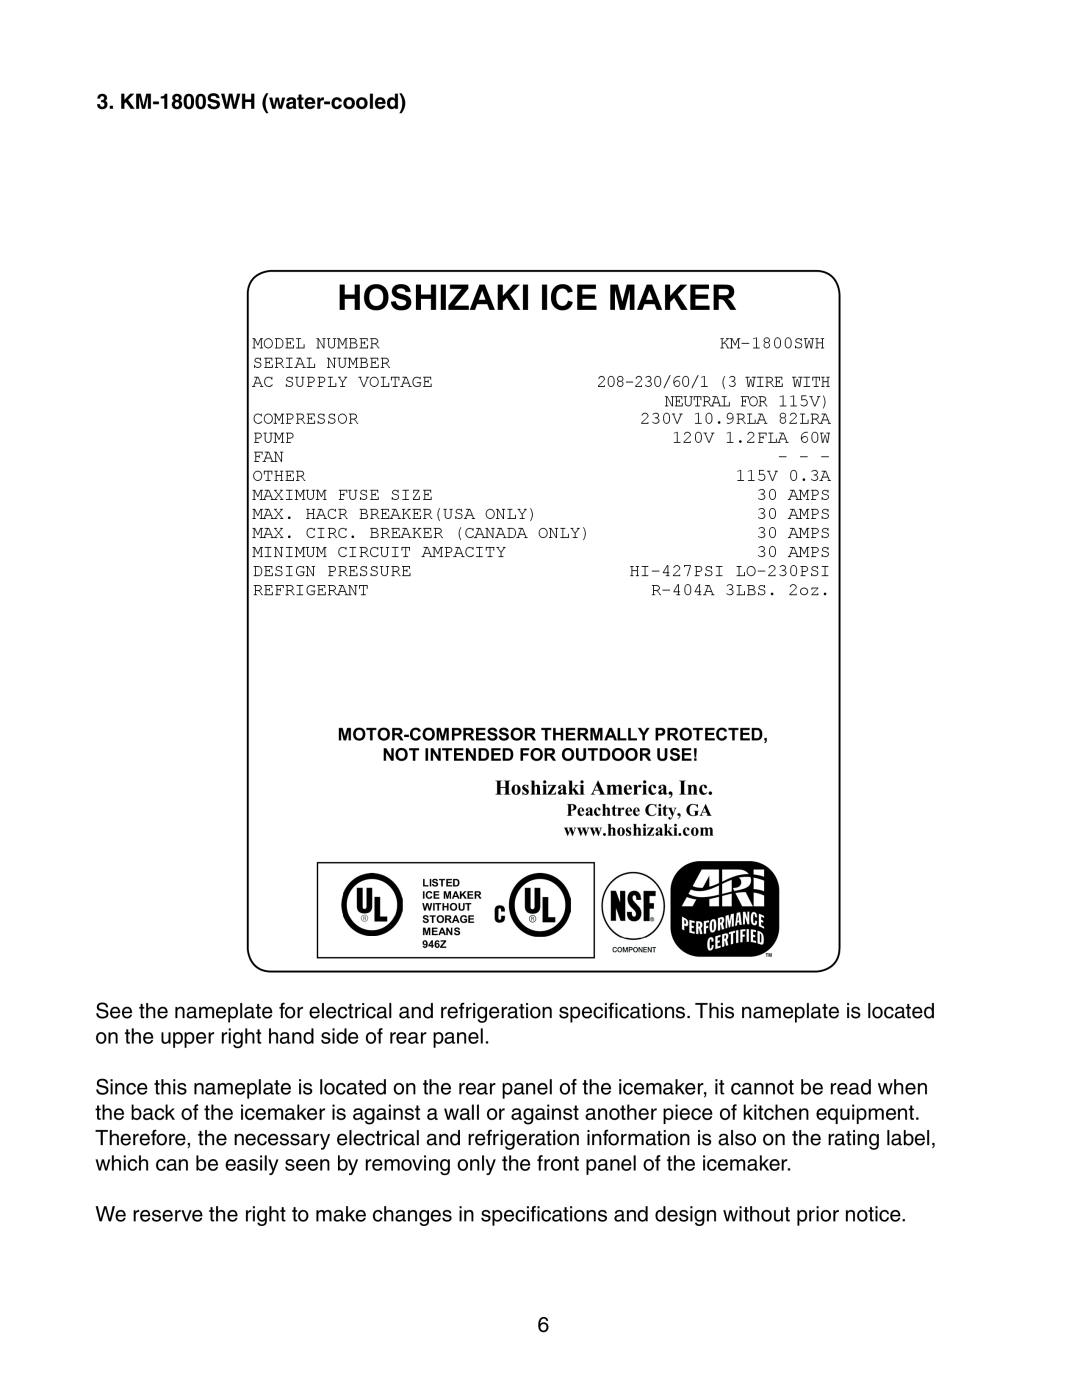 Hoshizaki KM-1800SRH/3, KM-1800SWH/3, KM-1800SAH/3 KM-1800SWH water-cooled, Hoshizaki Ice Maker, Hoshizaki America, Inc 